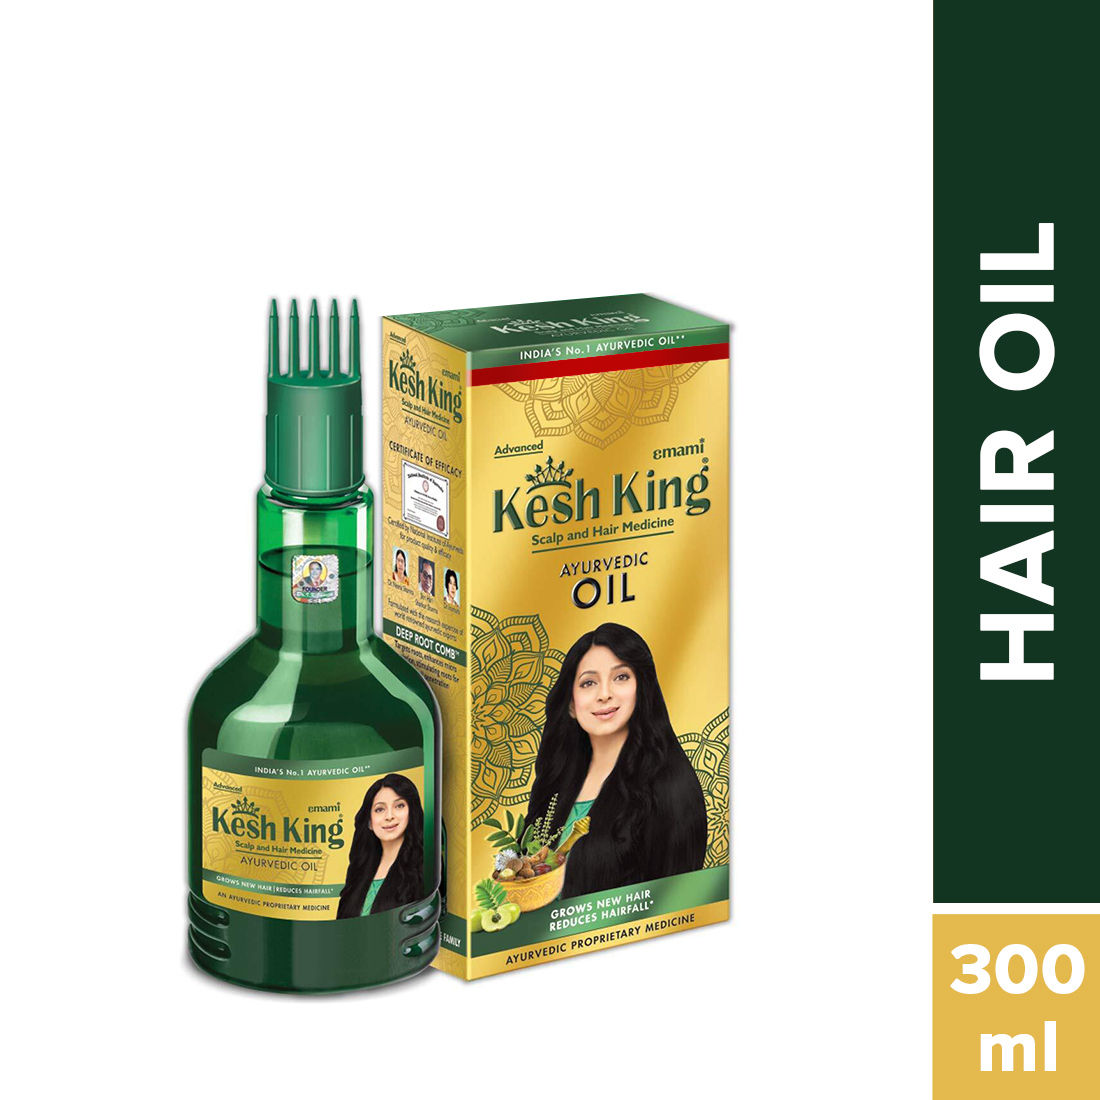 Kesh King Ayurvedic Scalp and Hair Medicine Oil, 300 ml, Pack of 1 